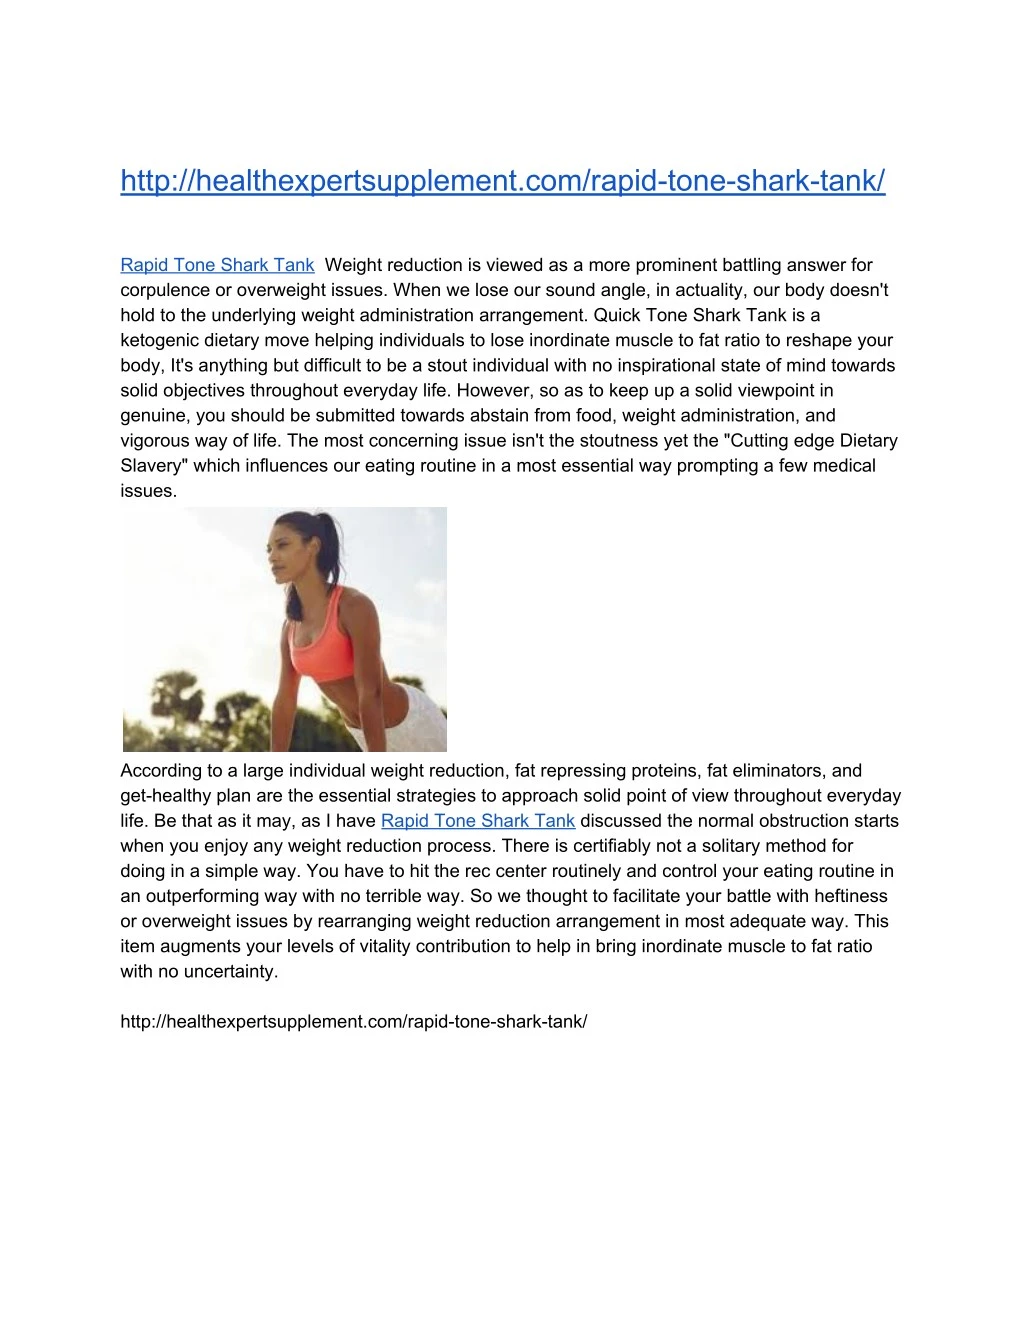 http healthexpertsupplement com rapid tone shark